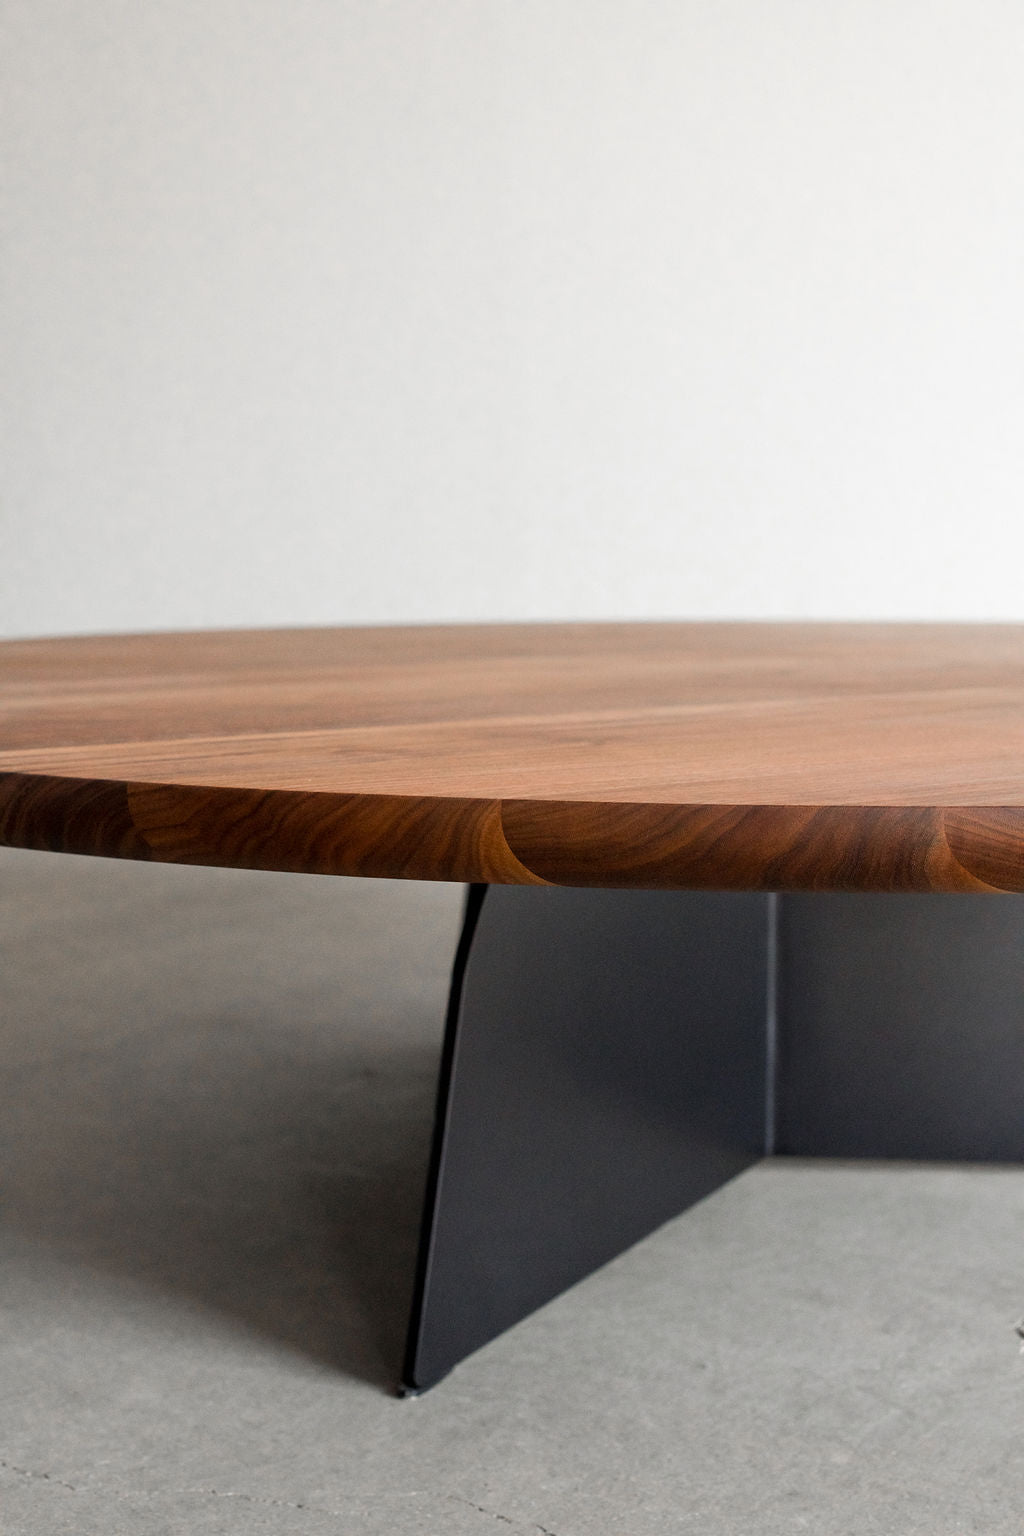 Tula Coffee table- steel legs with walnut wood top